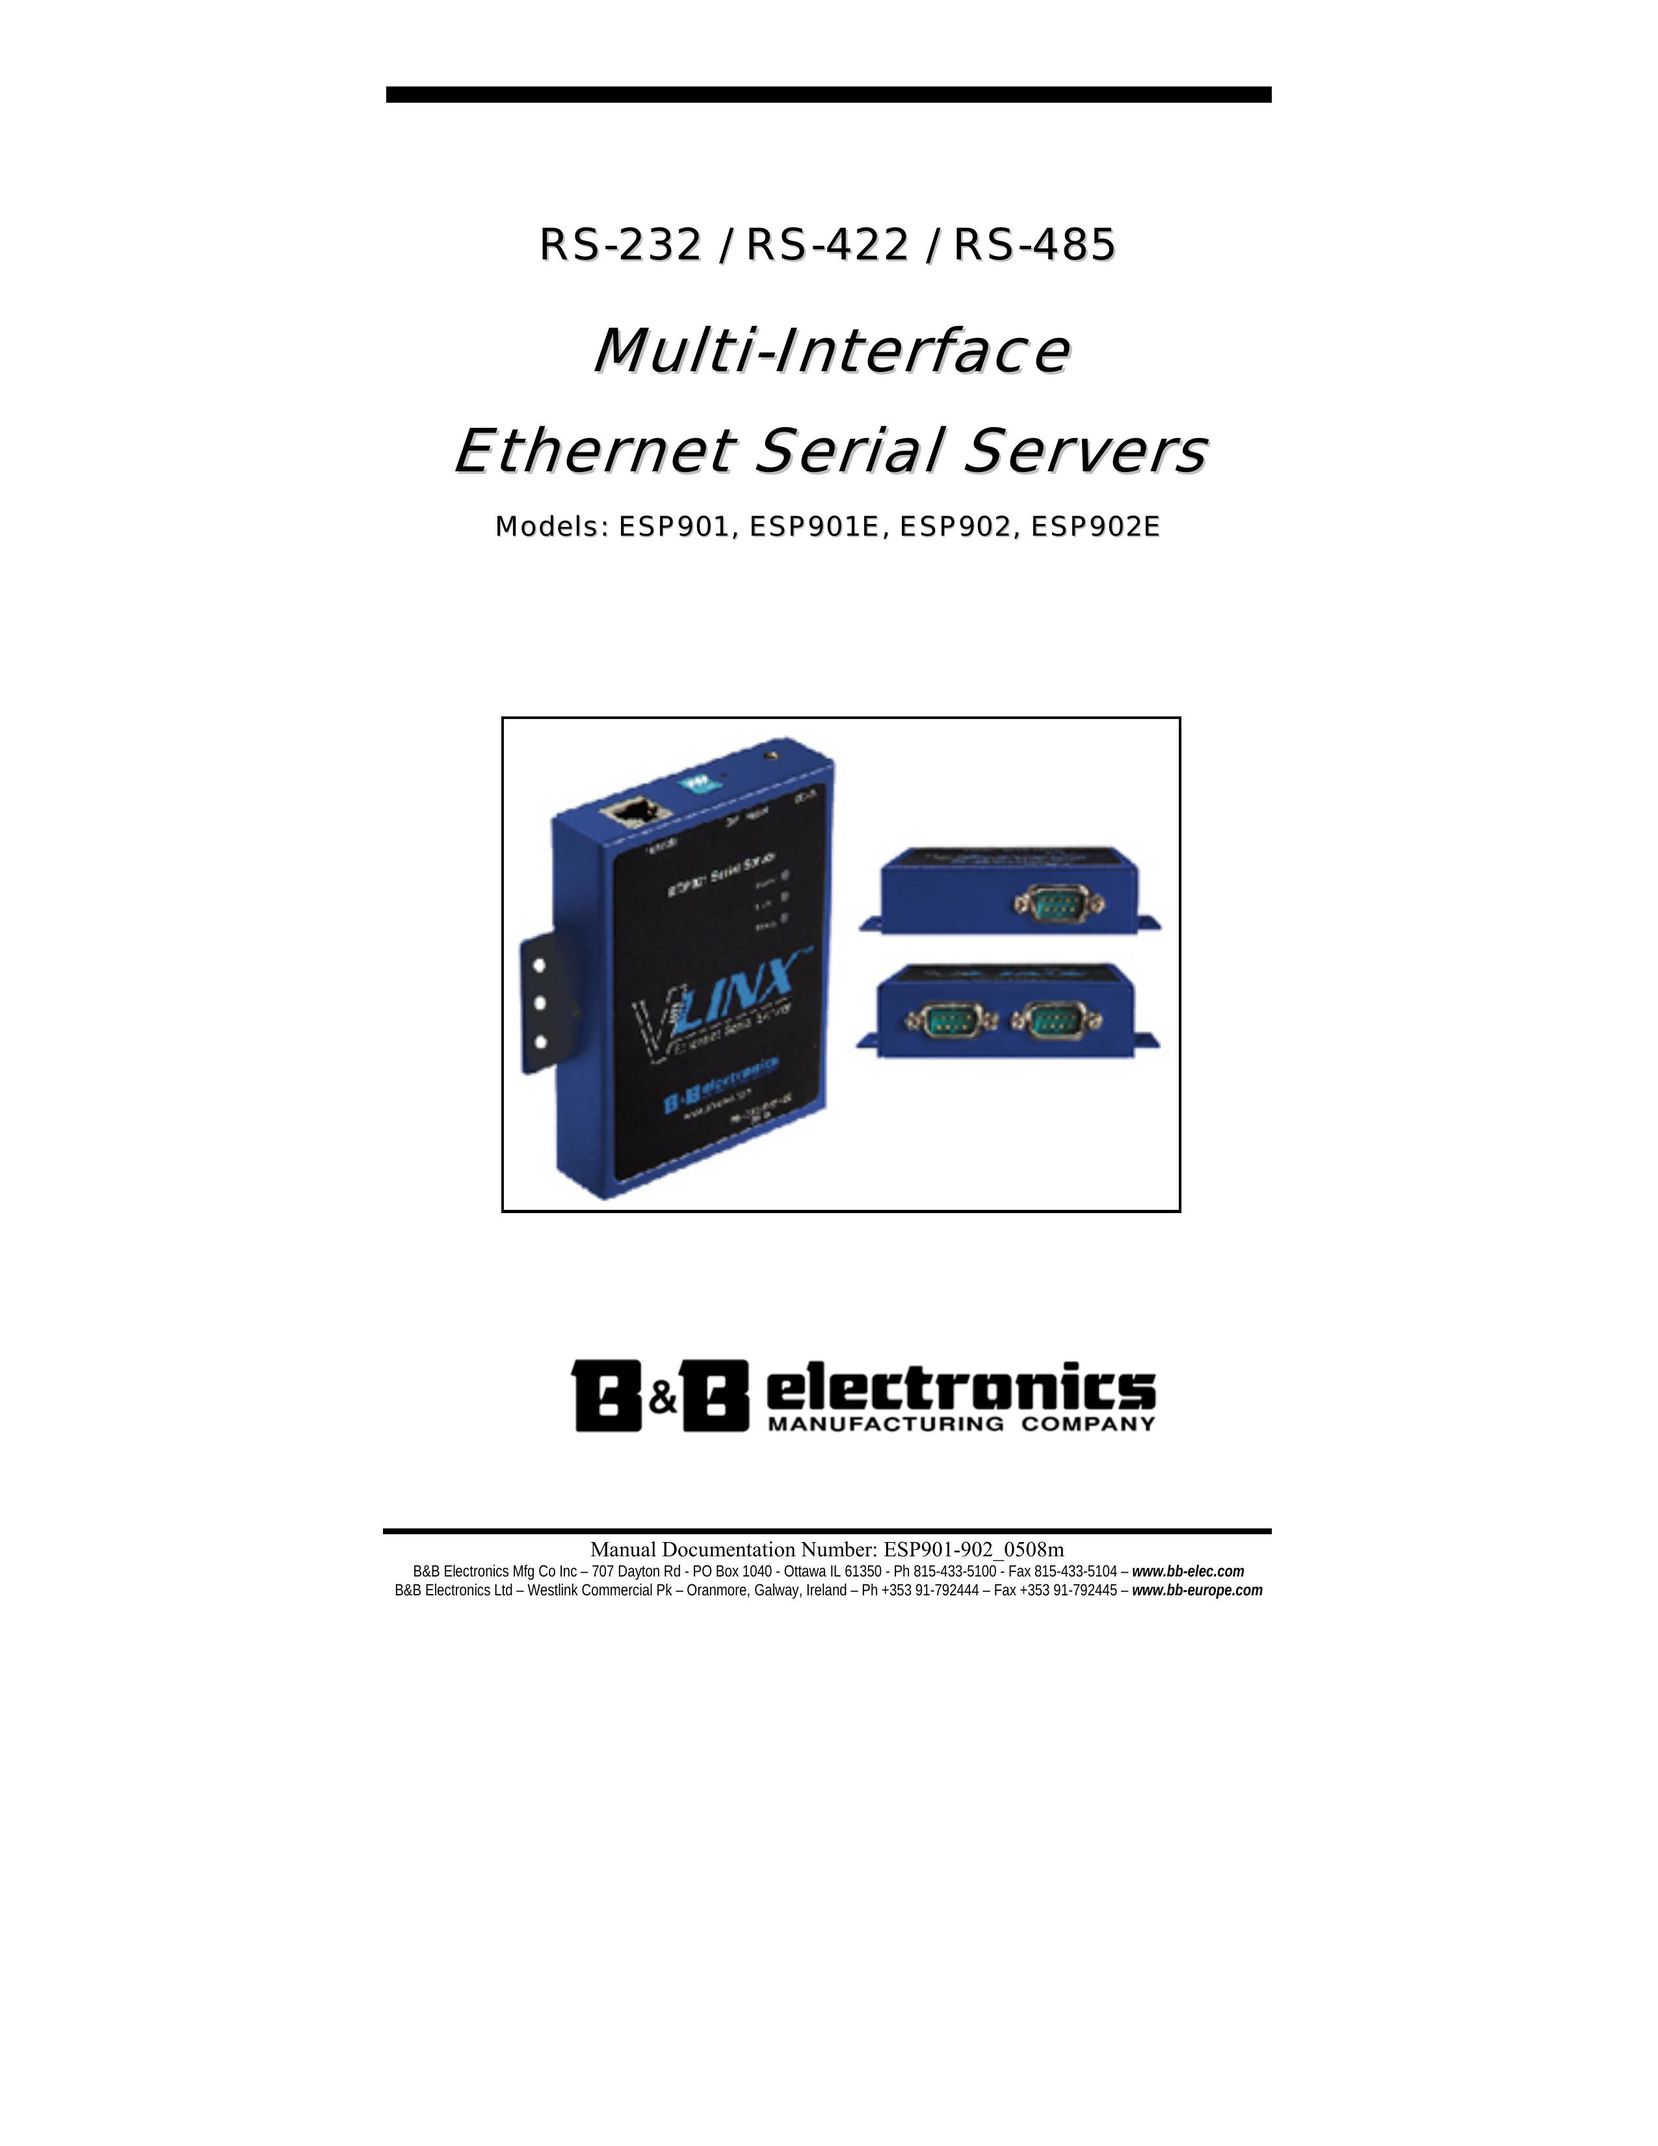 B&B Electronics ESP902 Home Theater Server User Manual